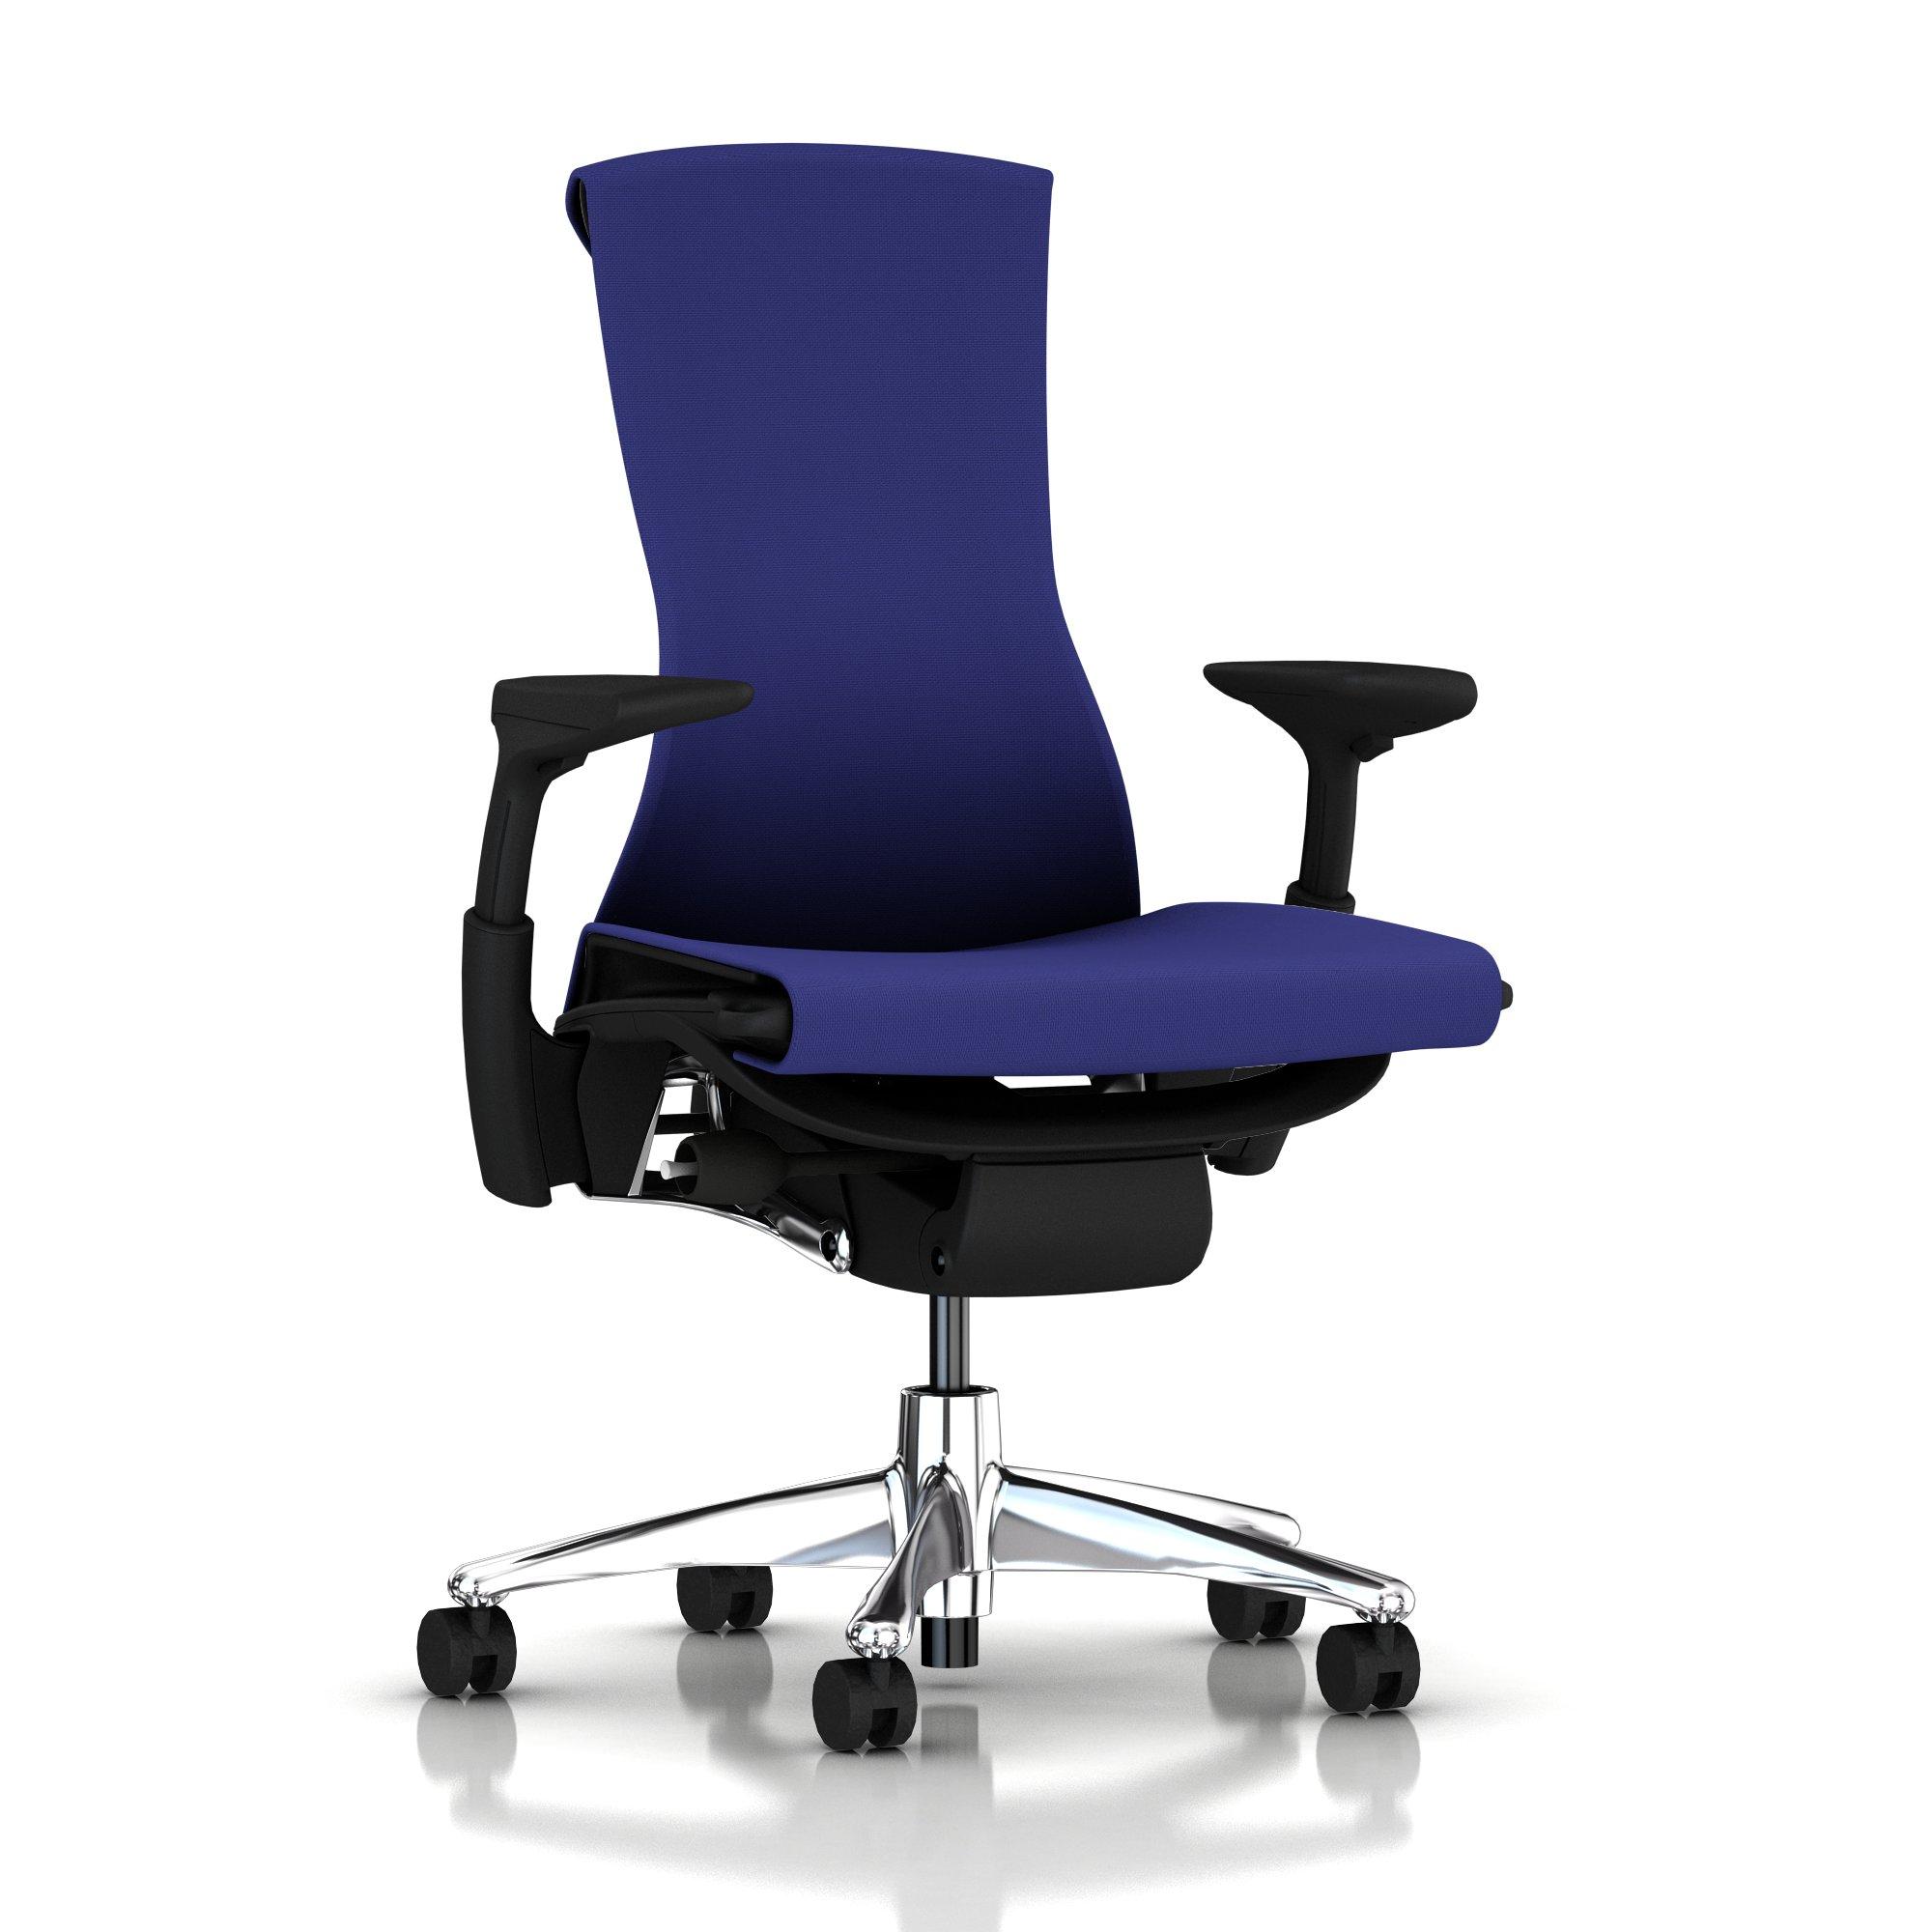 Embody Chair Iris Blue Rhythm with Graphite Frame Aluminum Base by Herman Miller